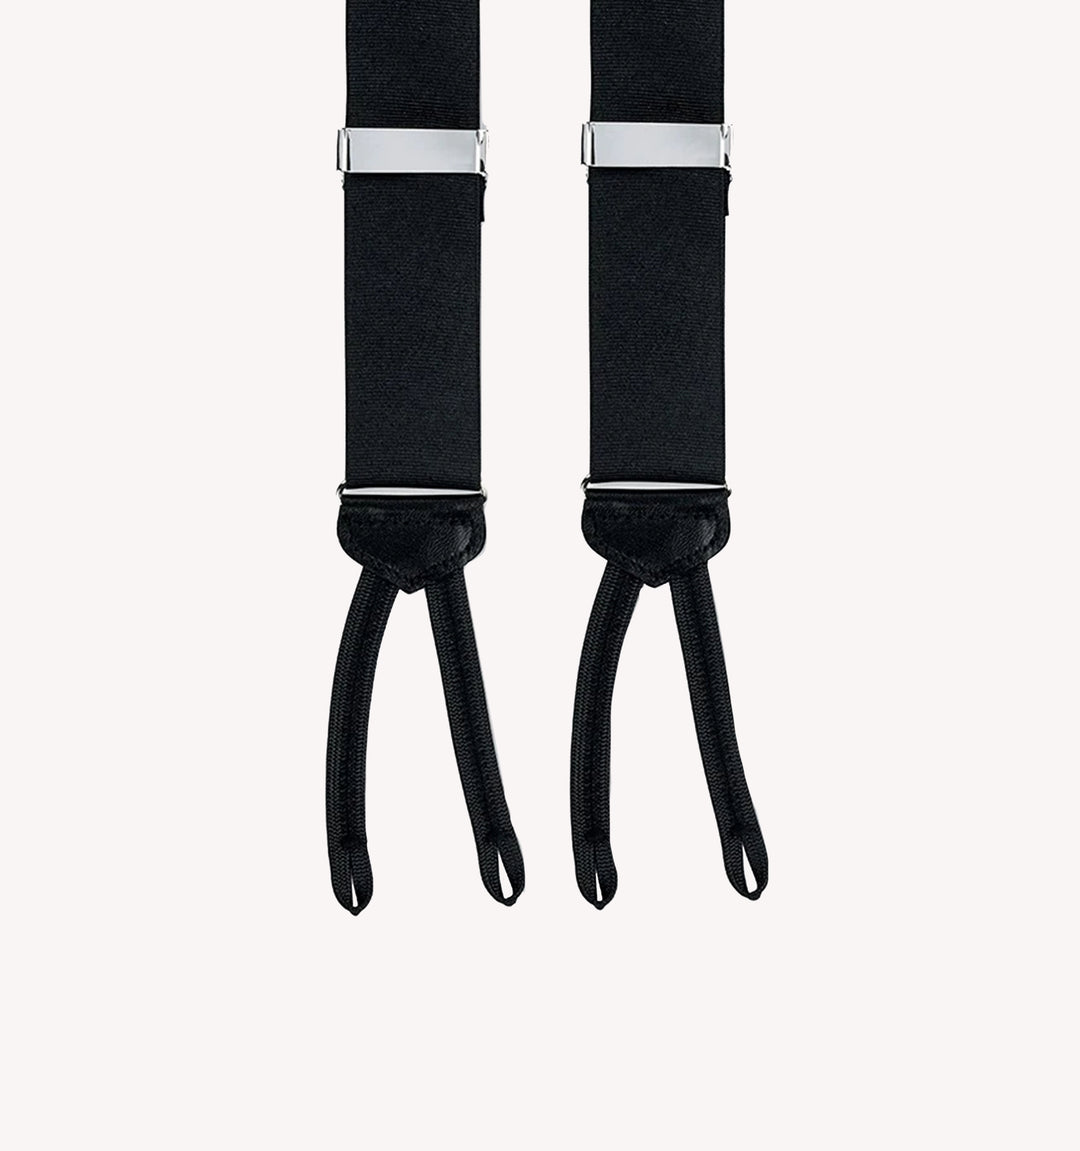 R. Hanauer Punjab Suspenders in Black